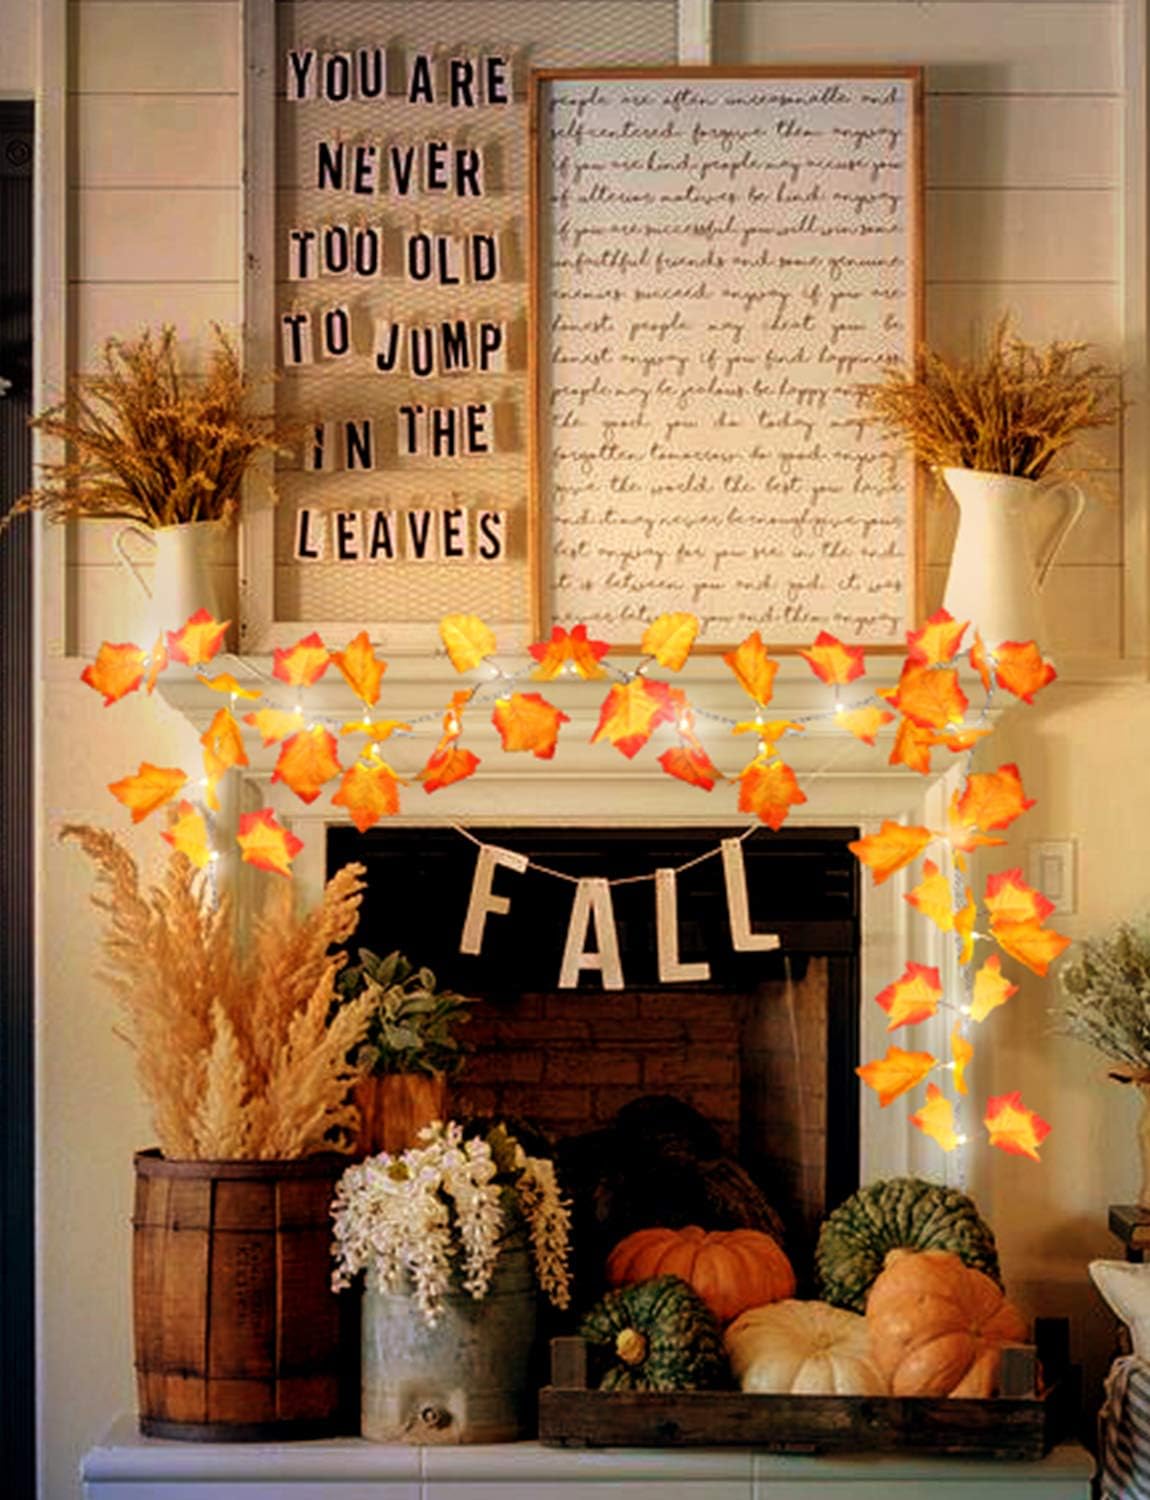 The Best Halloween Decorations: Light-Up Fall Garland